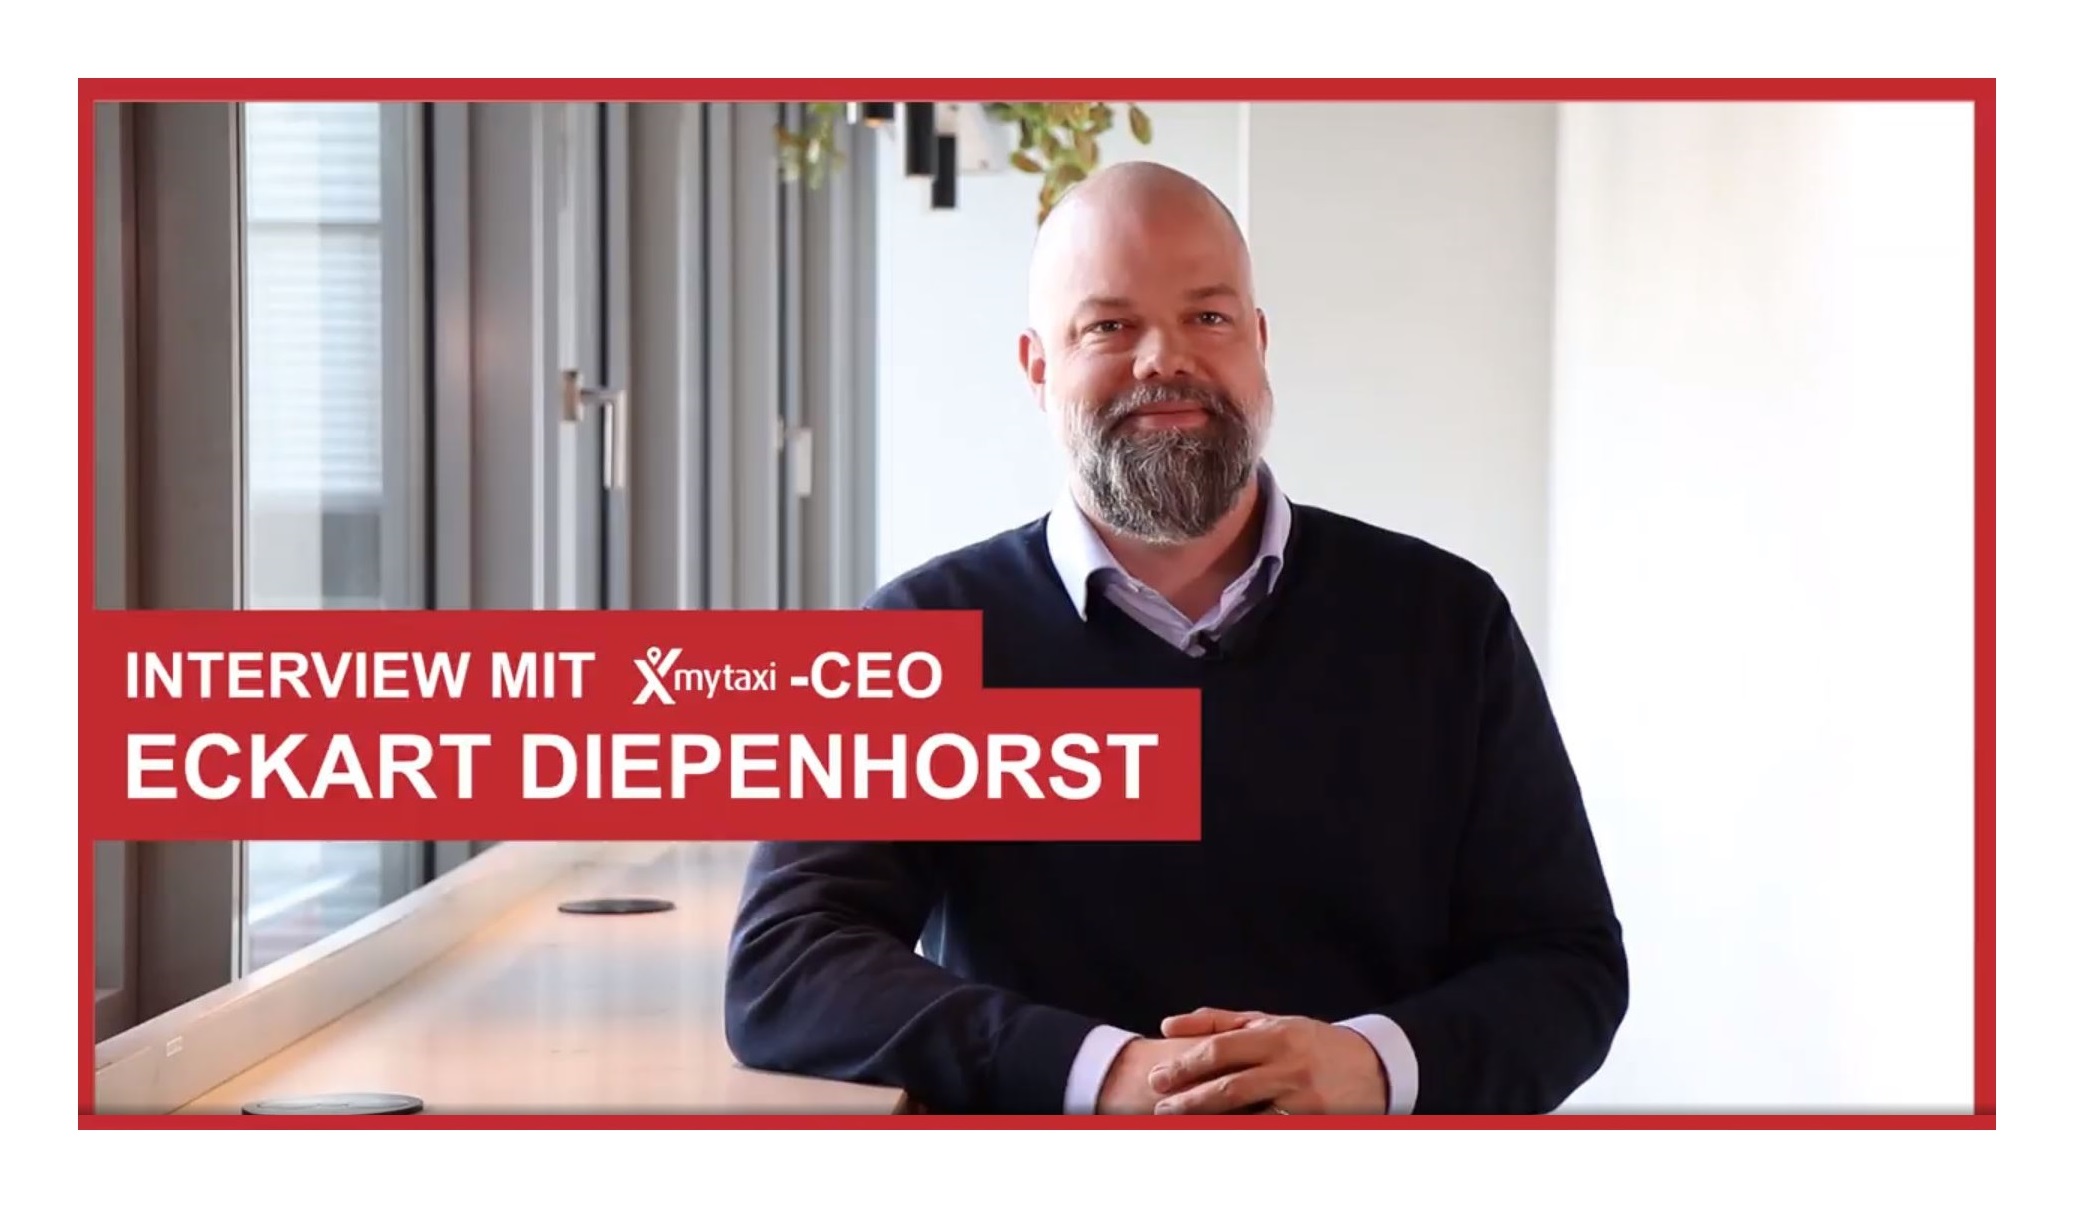 Interview mit mytaxi CEO Eckart Diepenhorst